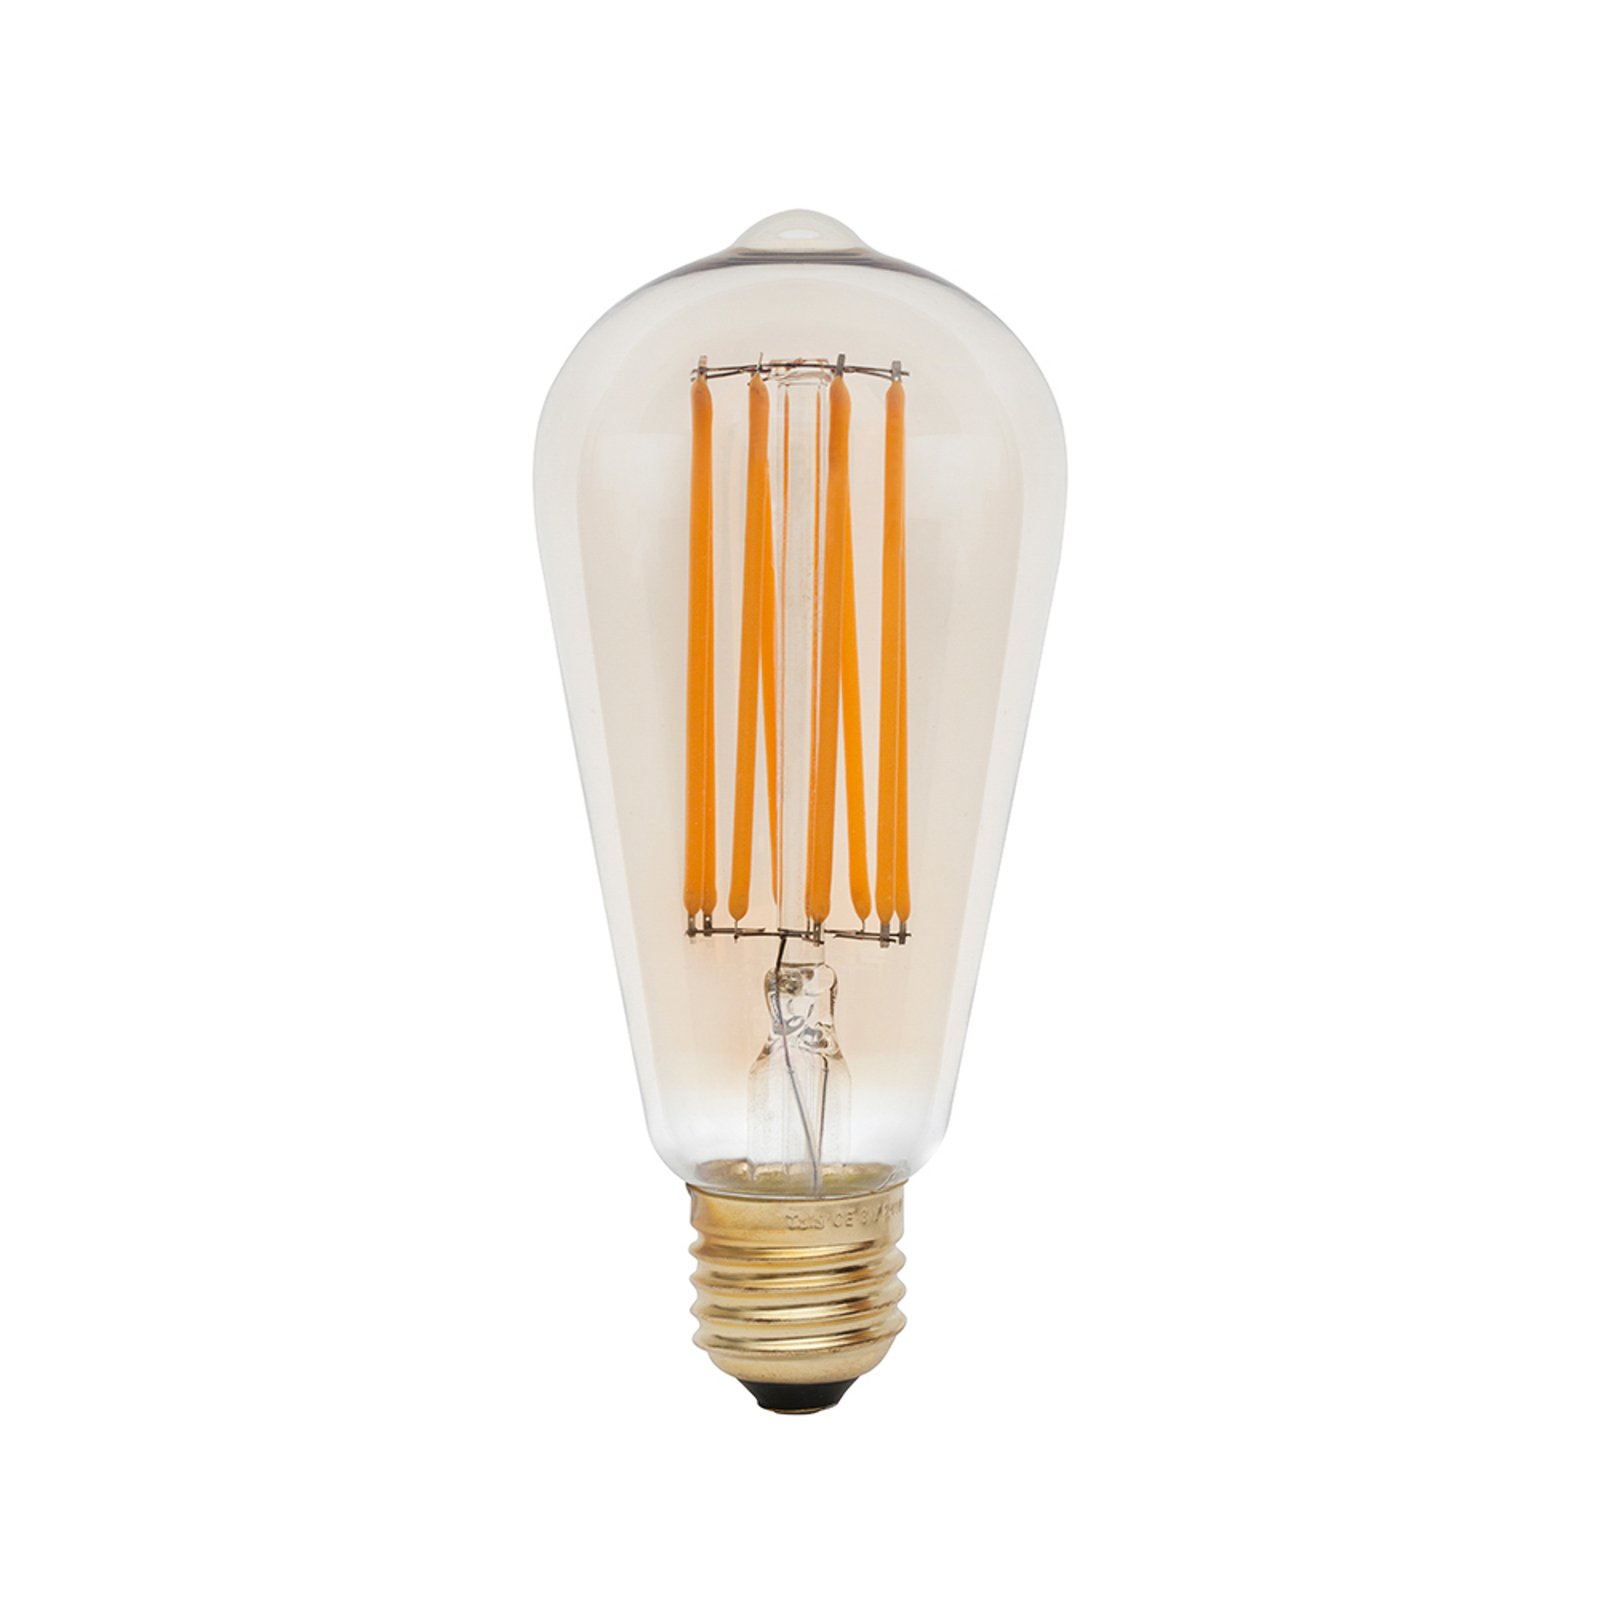 Tala LED lamp ST64 Filament E27 3W 2200K 210 lm dimbaar.